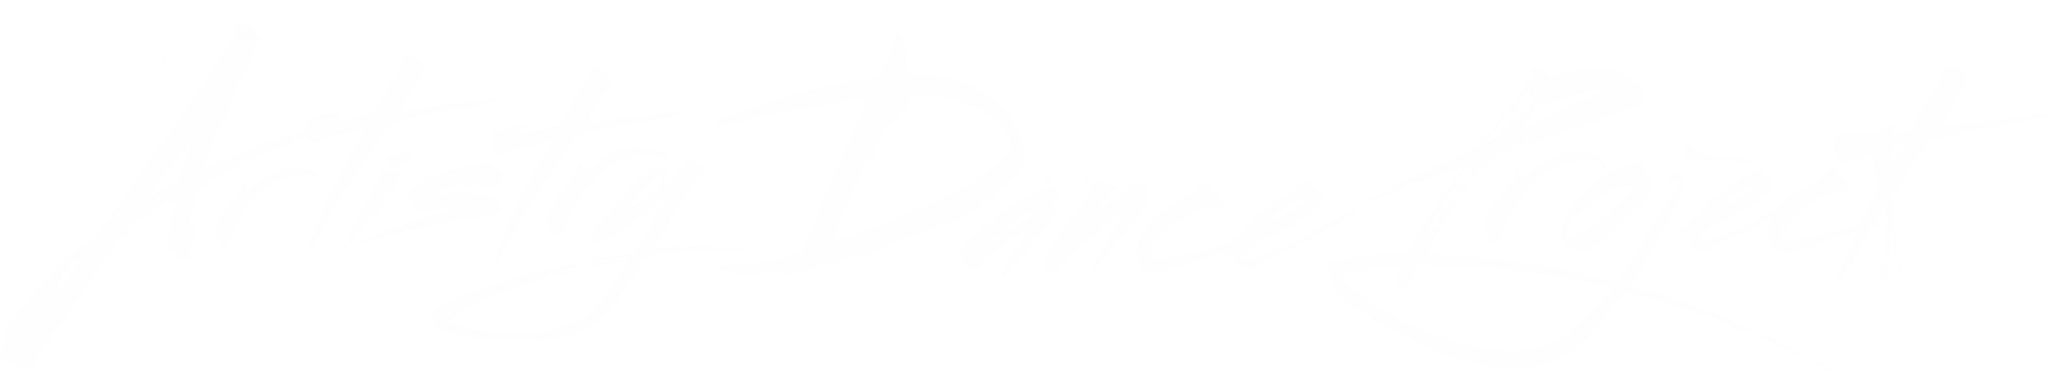 Artistry Dance Project Logo